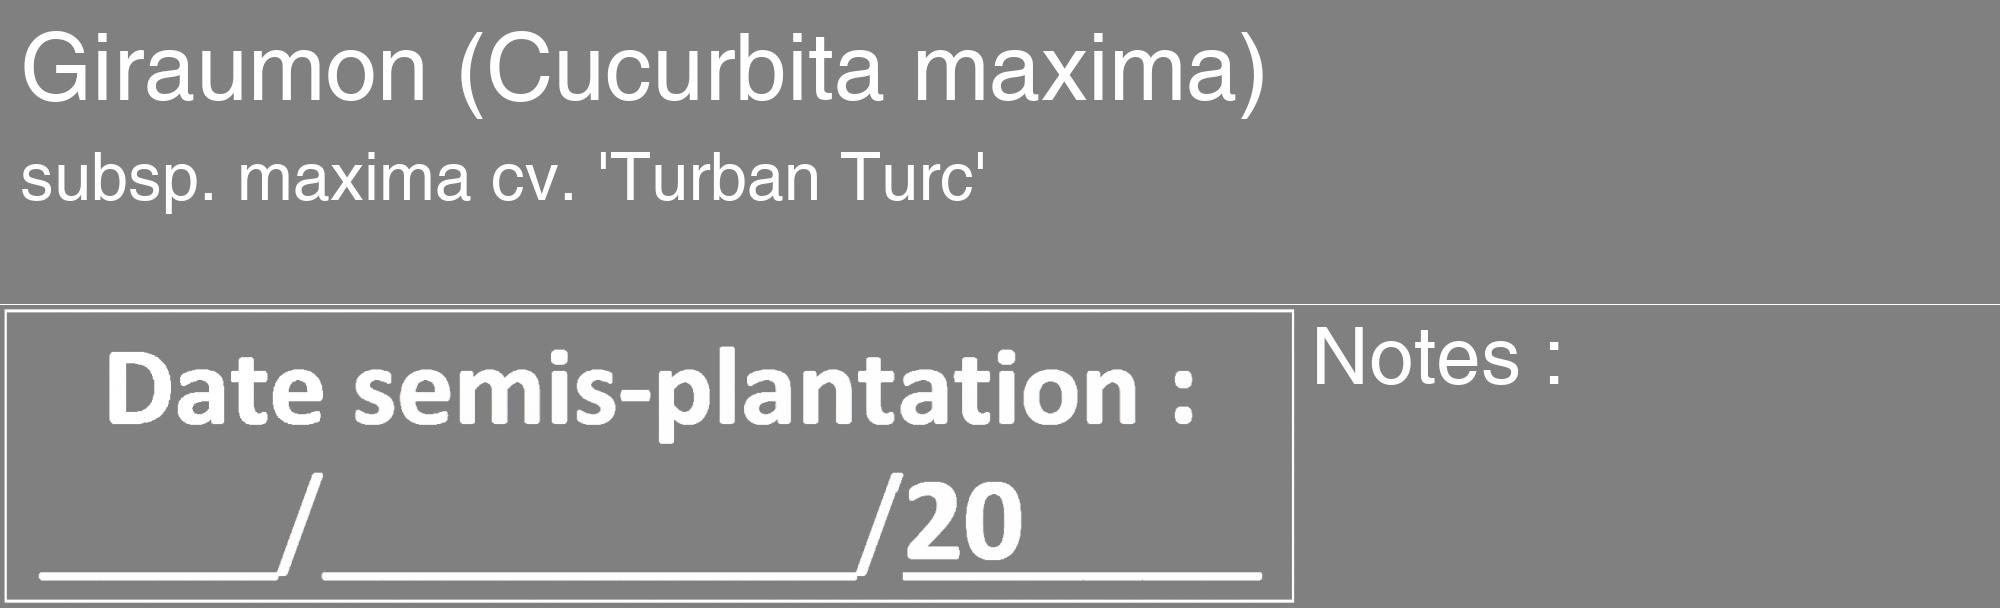 Étiquette de : Cucurbita maxima subsp. maxima cv. 'Turban Turc' - format c - style blanche57_basique_basiquehel avec comestibilité